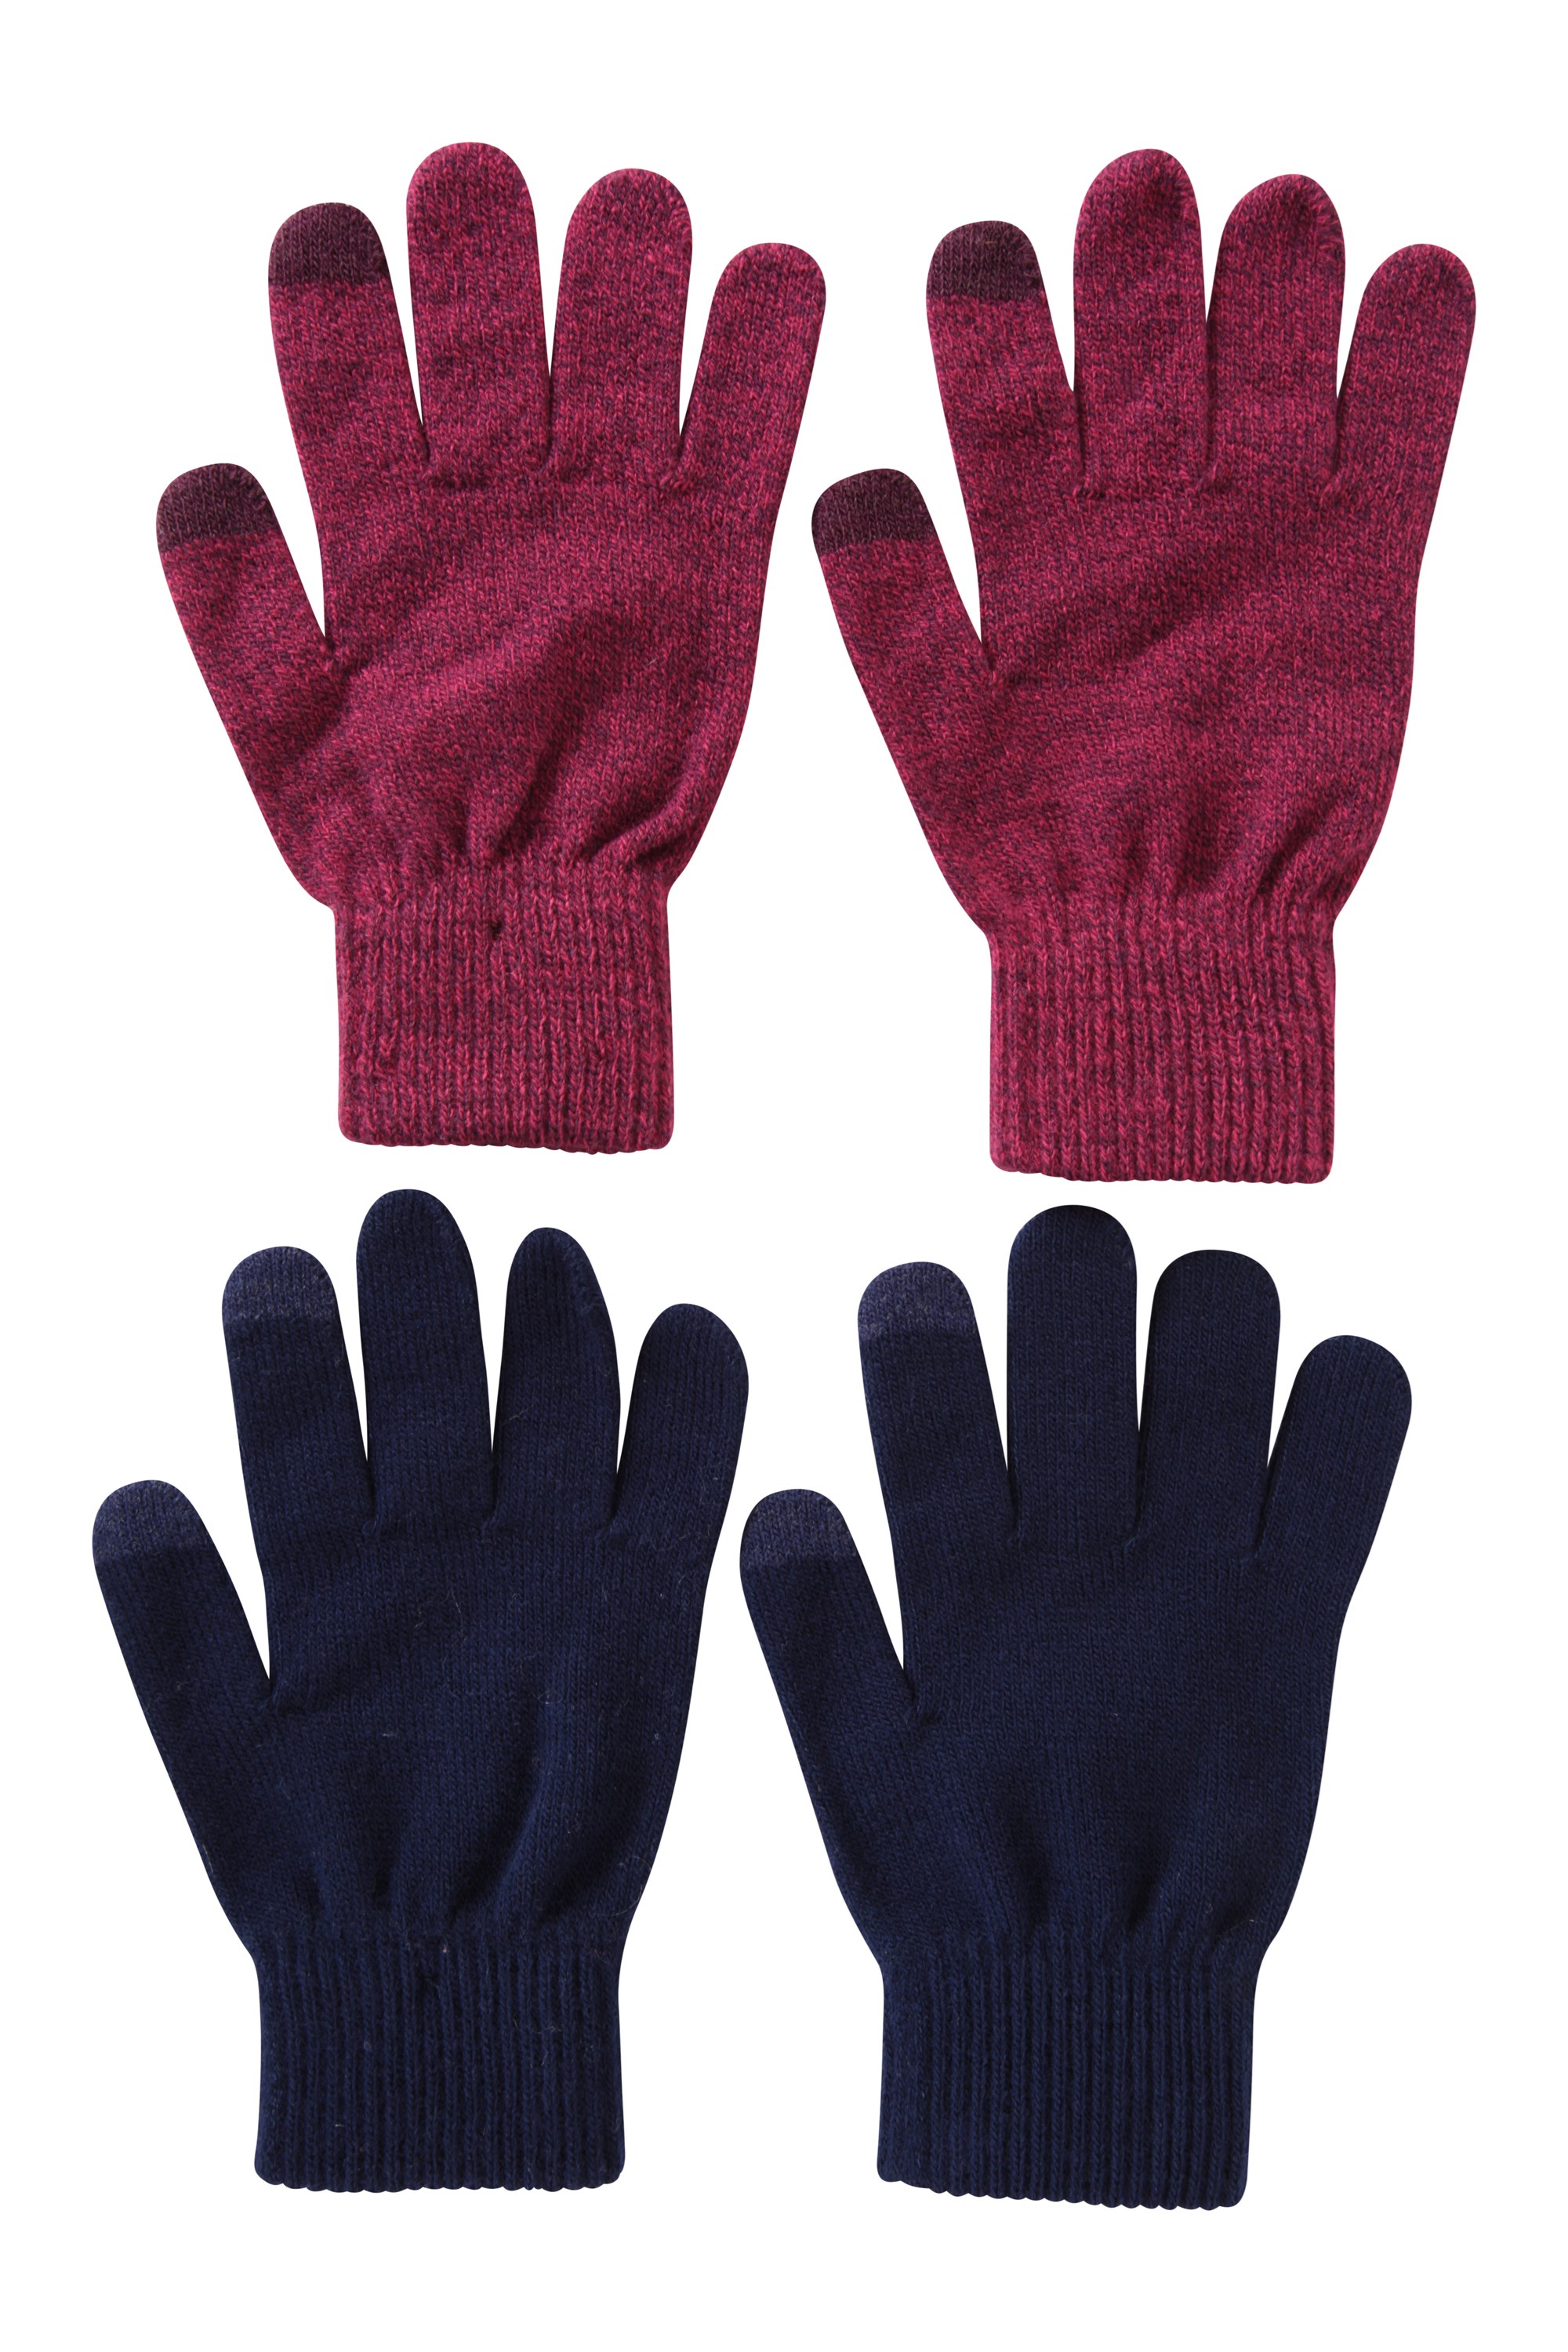 Mountain Warehouse Wms Magic Touch Screen Womens Glove 2 Pack Gloves 